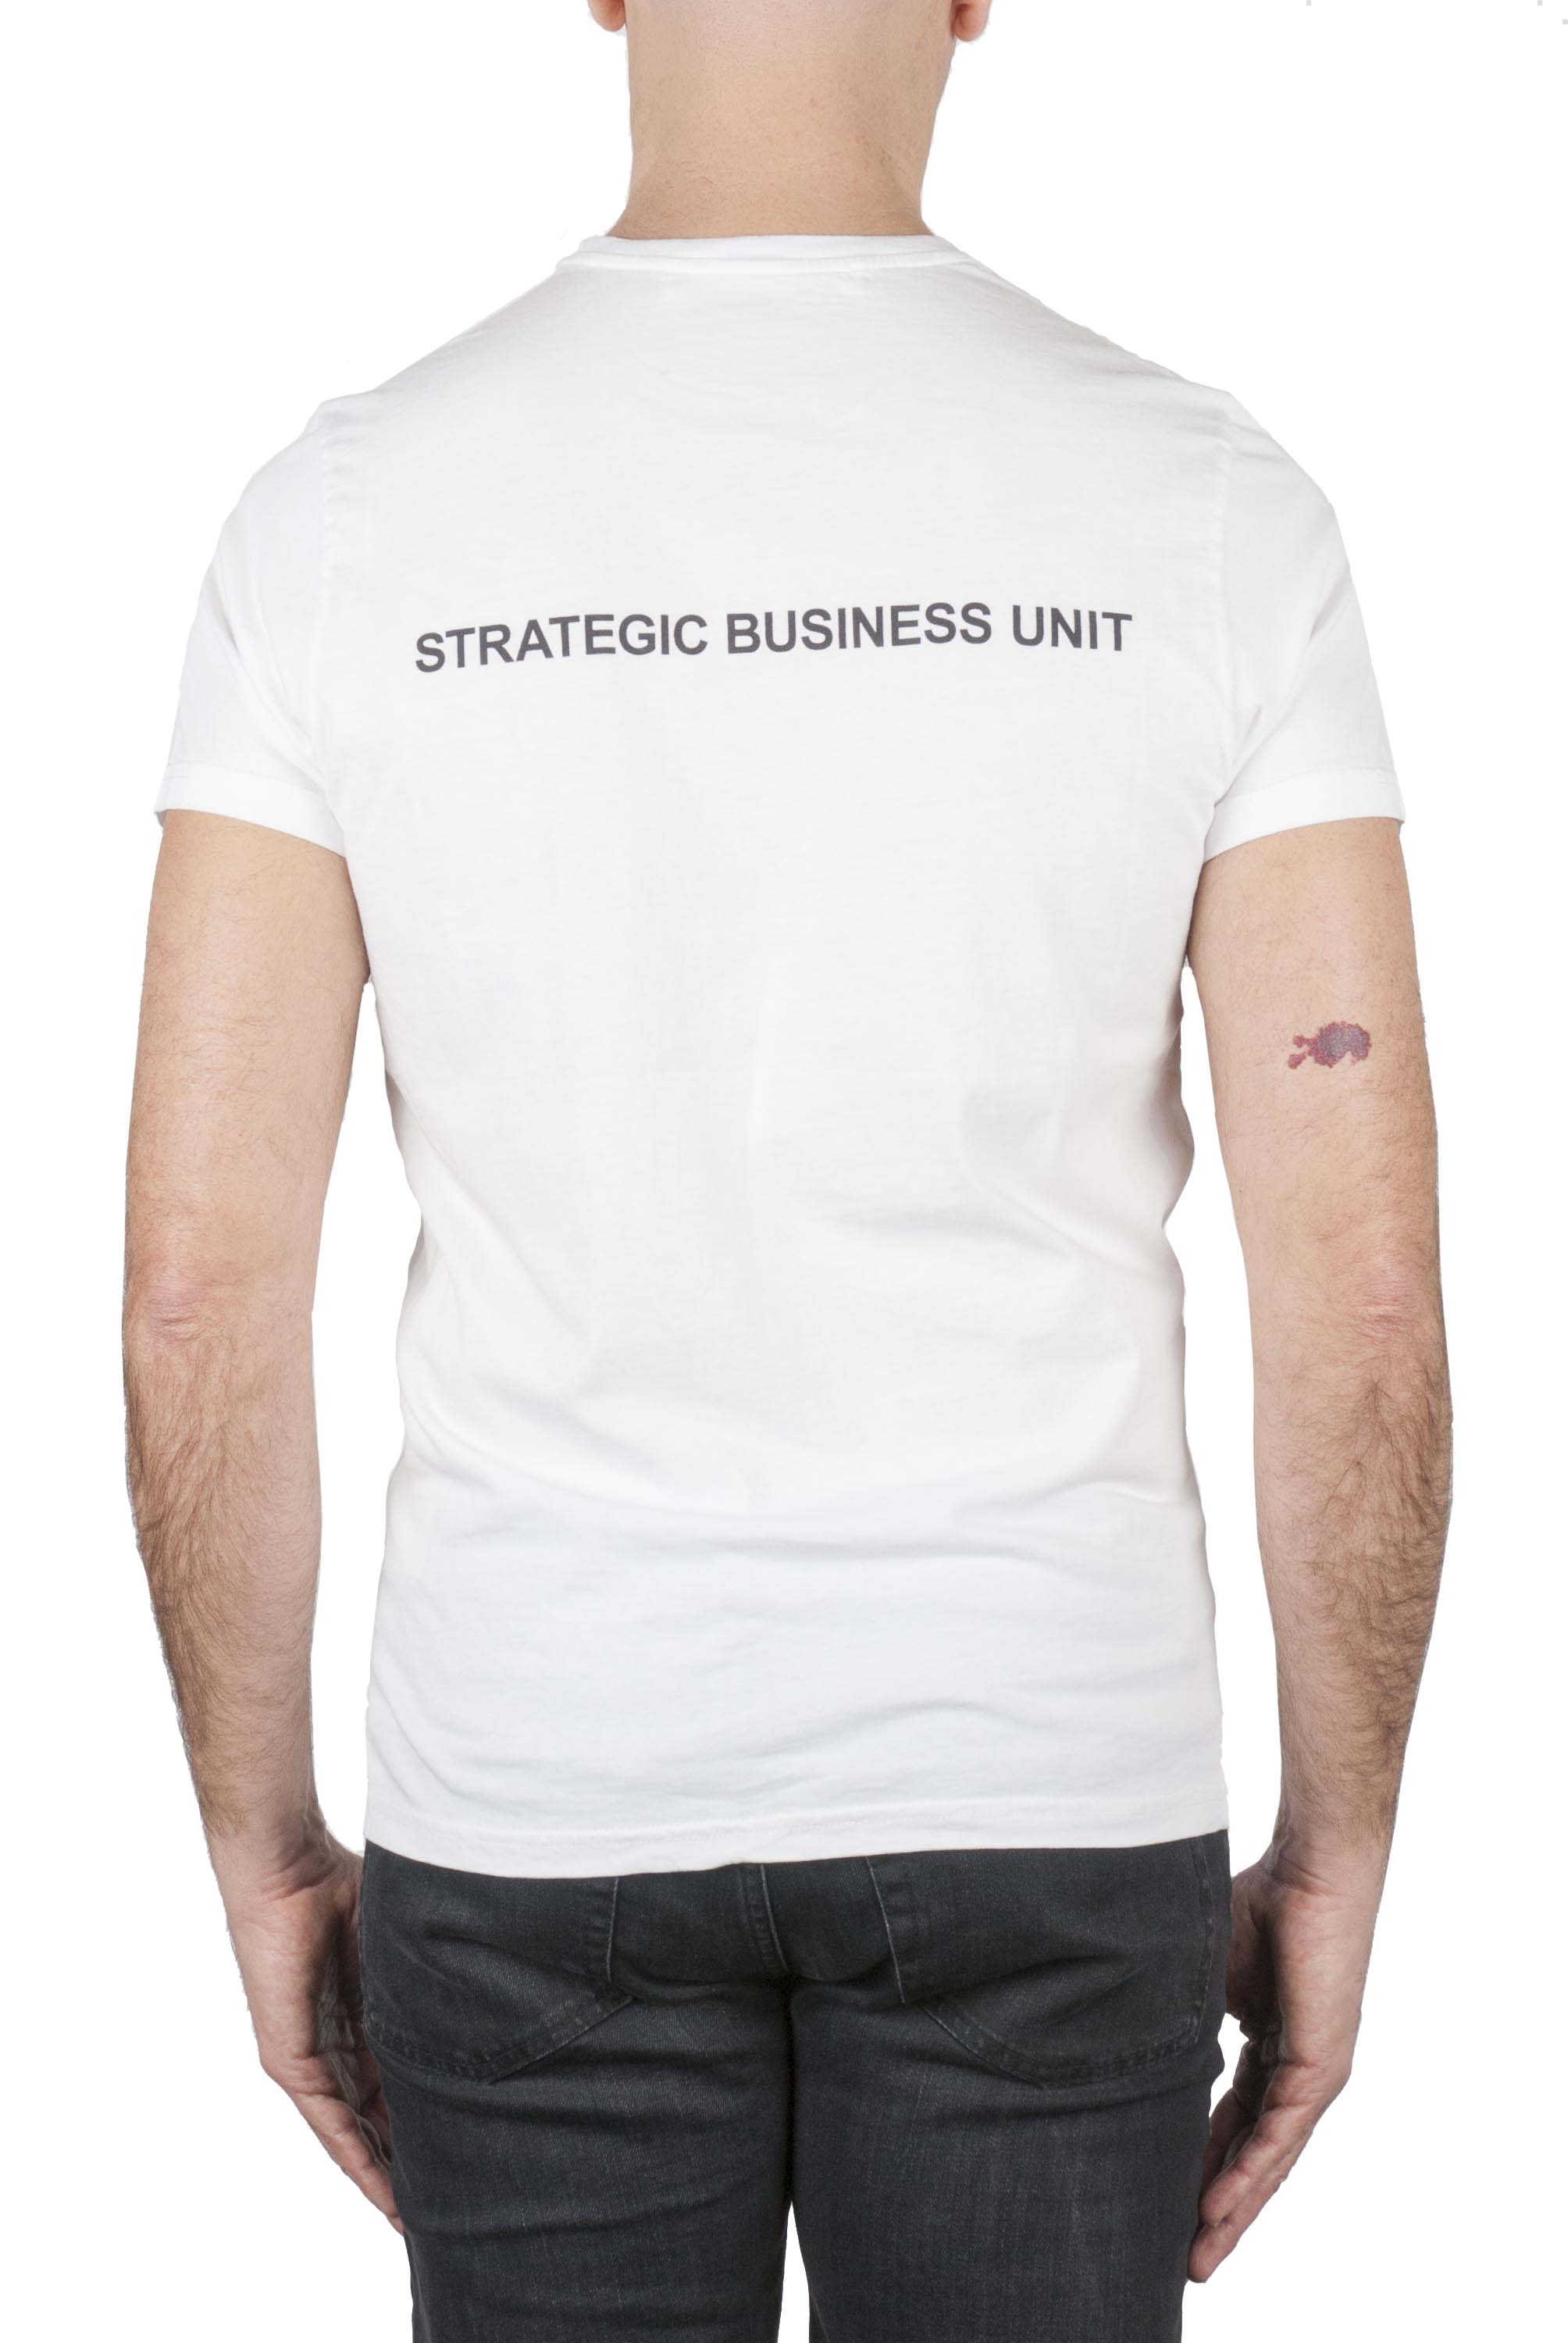 SBU 01162 Classique t-shirt logo imprimé 01